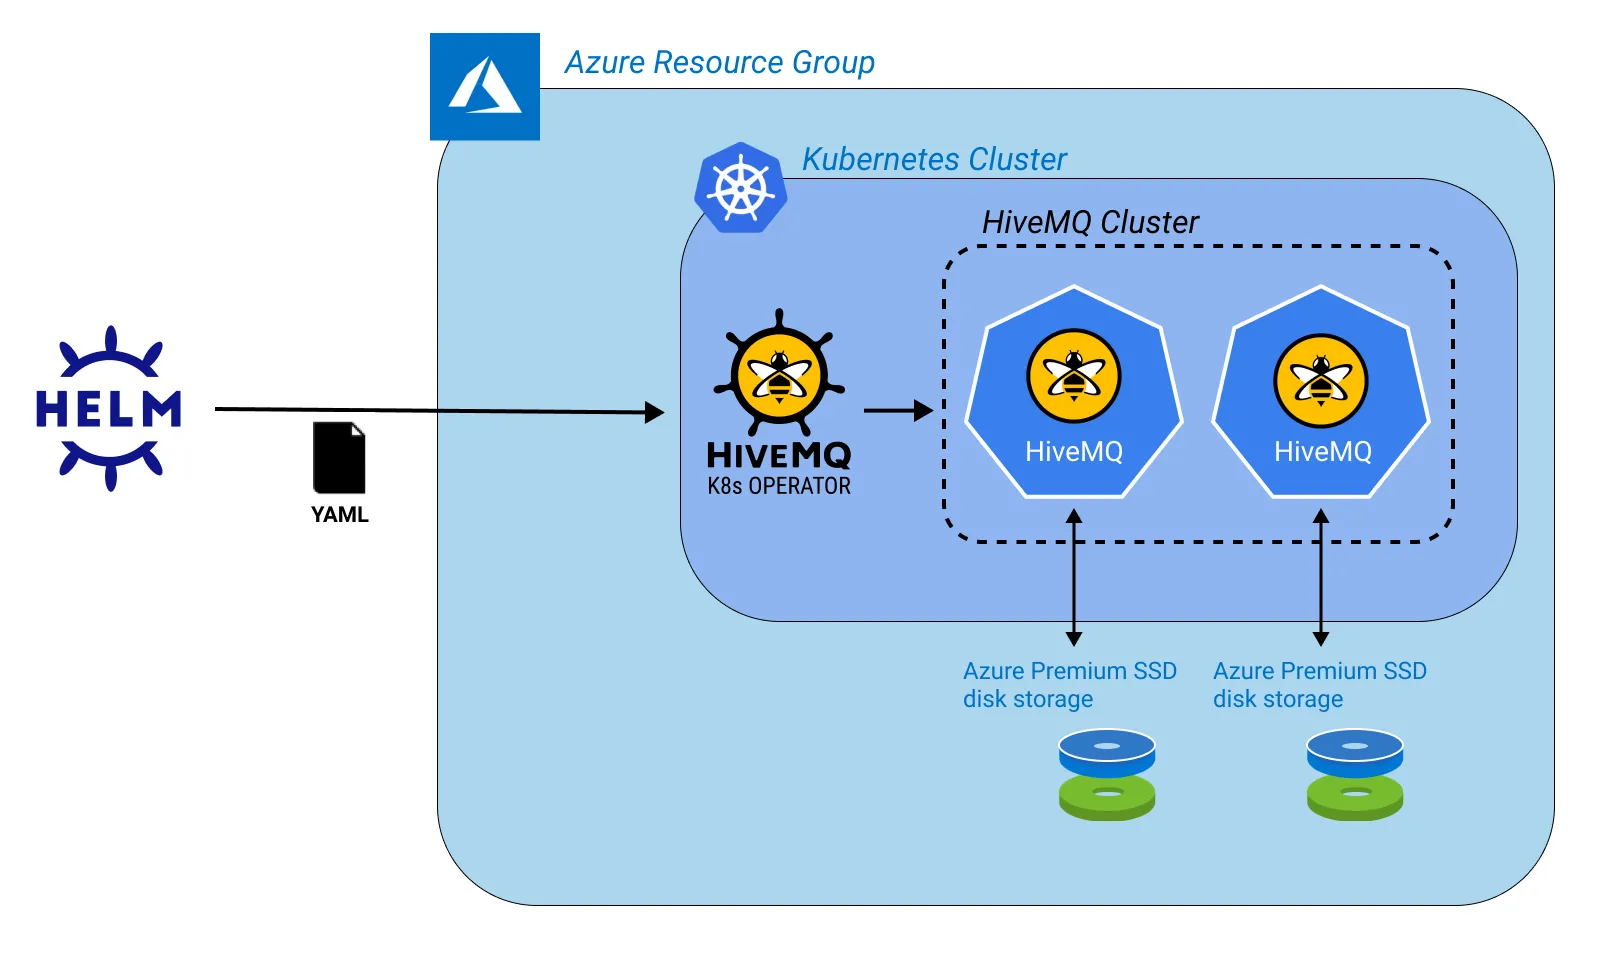 Azure Resource Group HELM